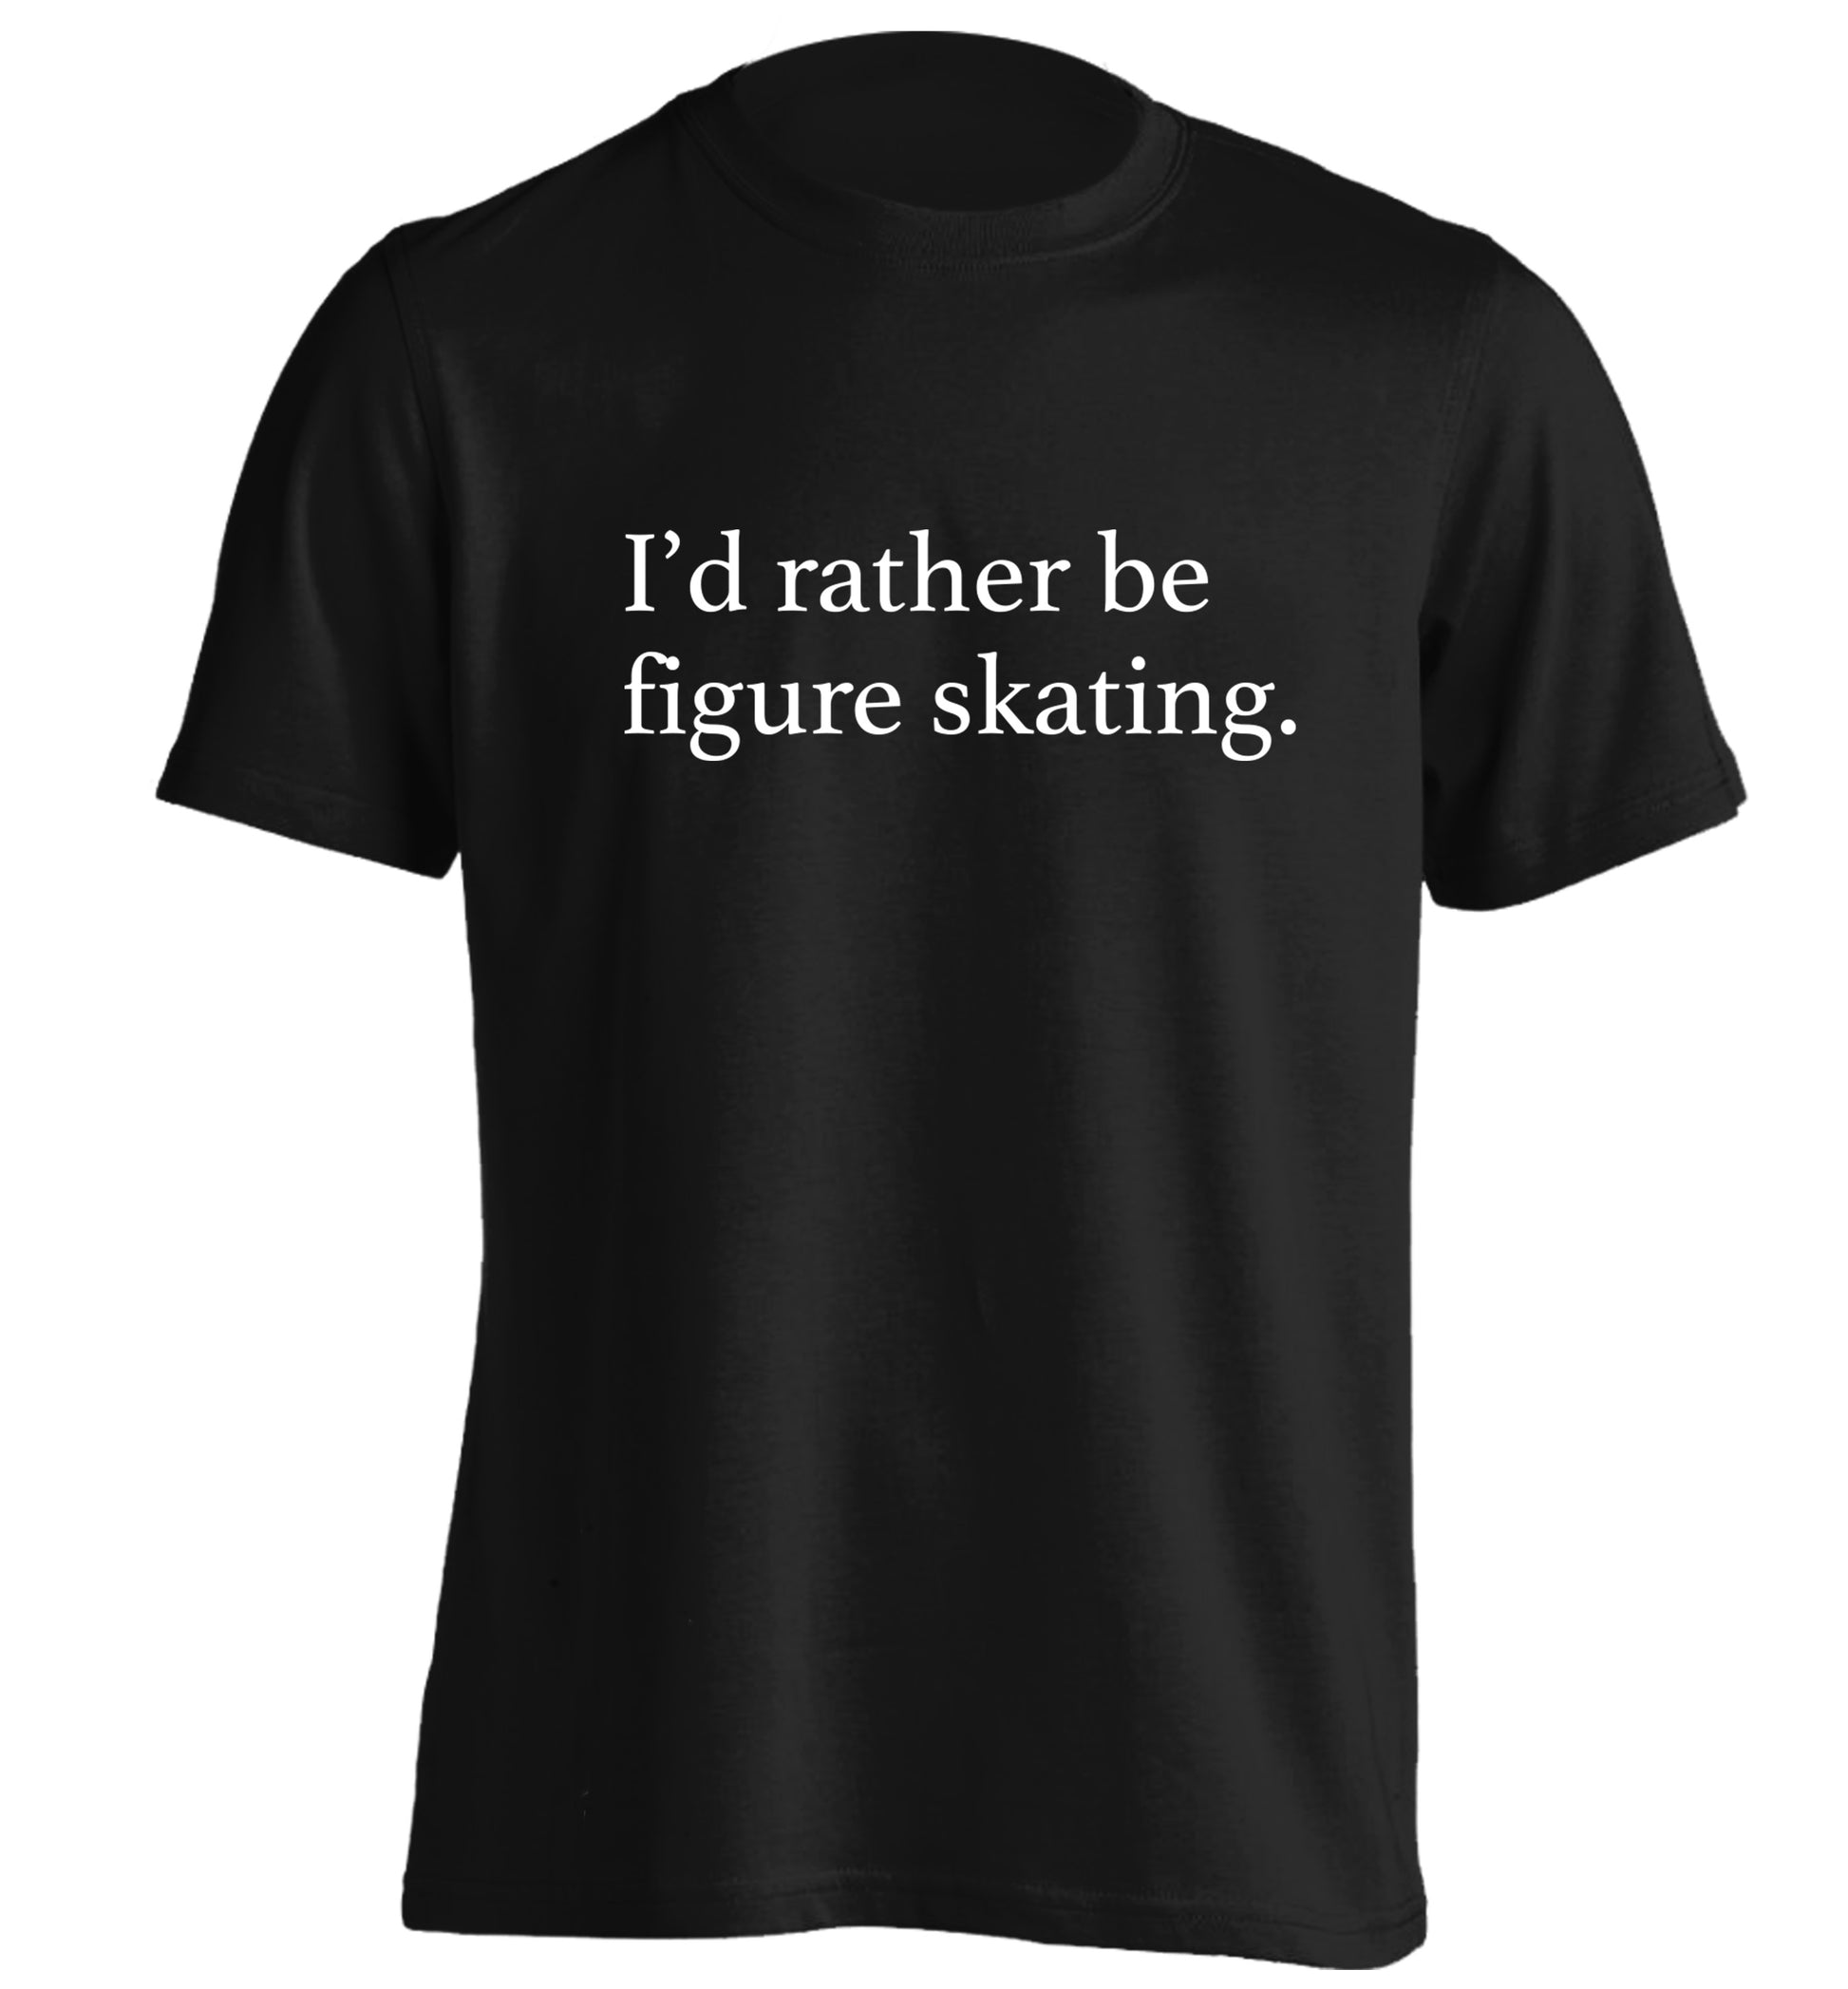 I'd rather be figure skating adults unisexblack Tshirt 2XL